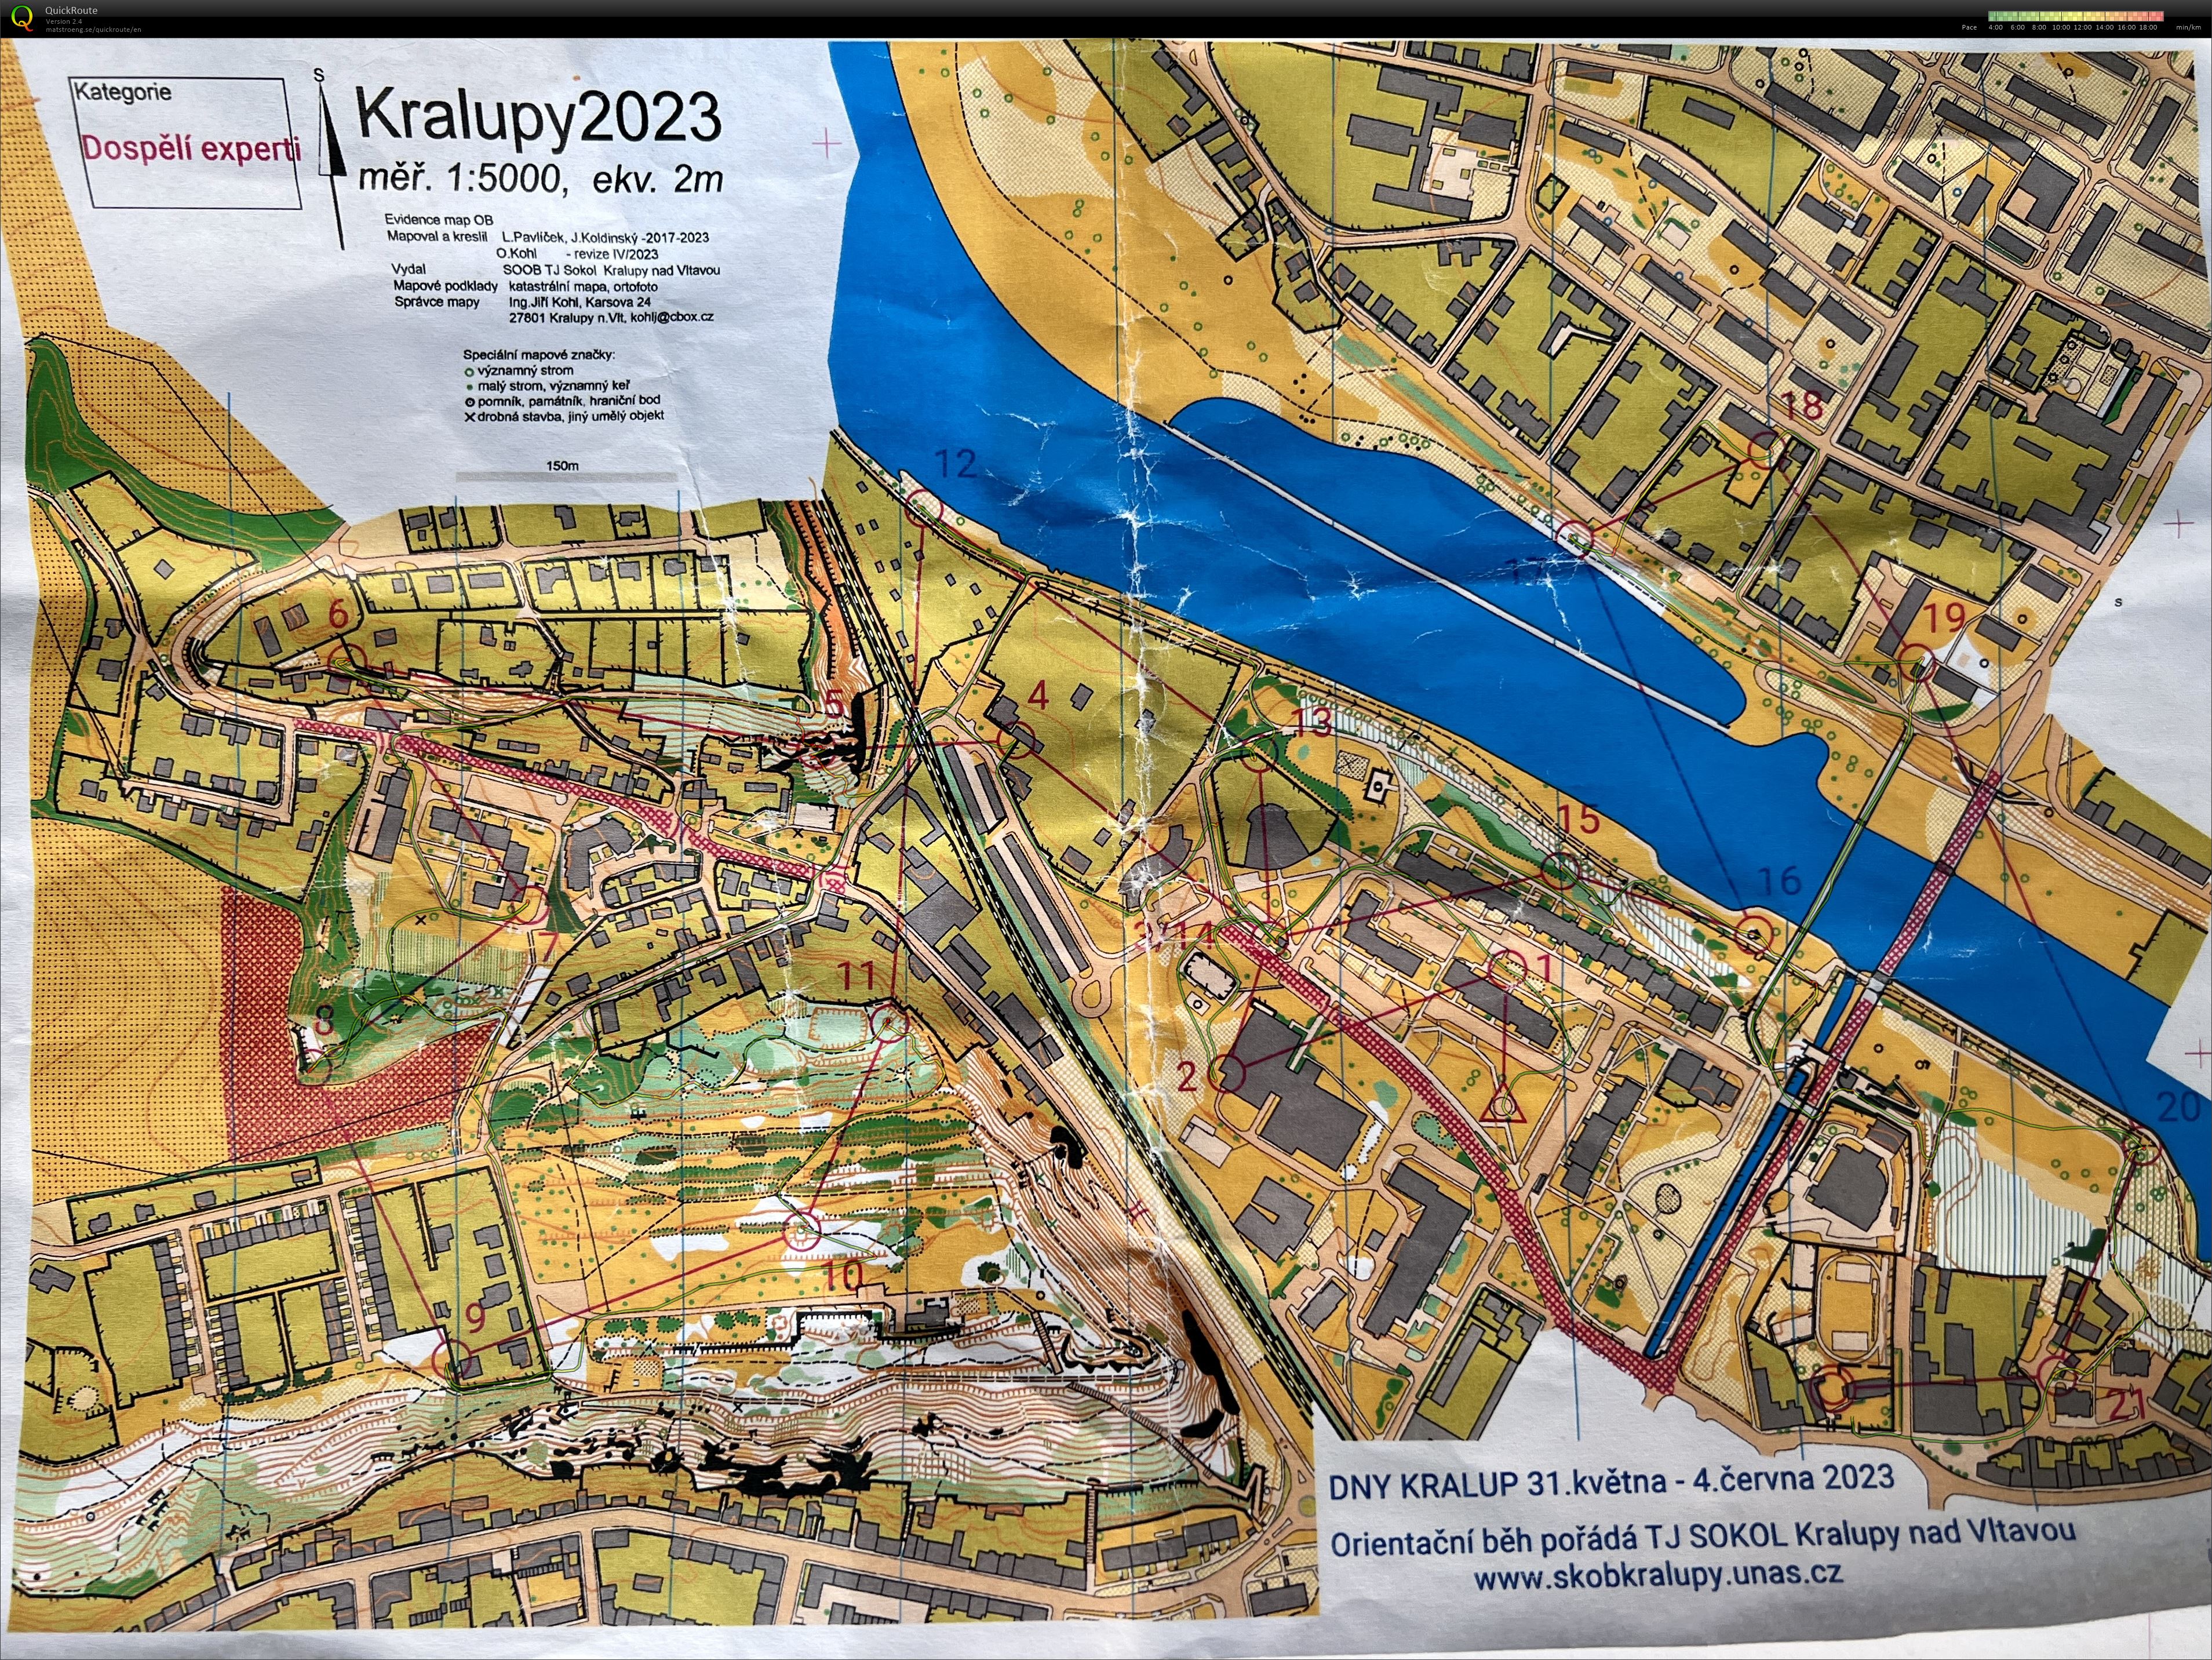 Dny Kralup 2023 (02.06.2023)